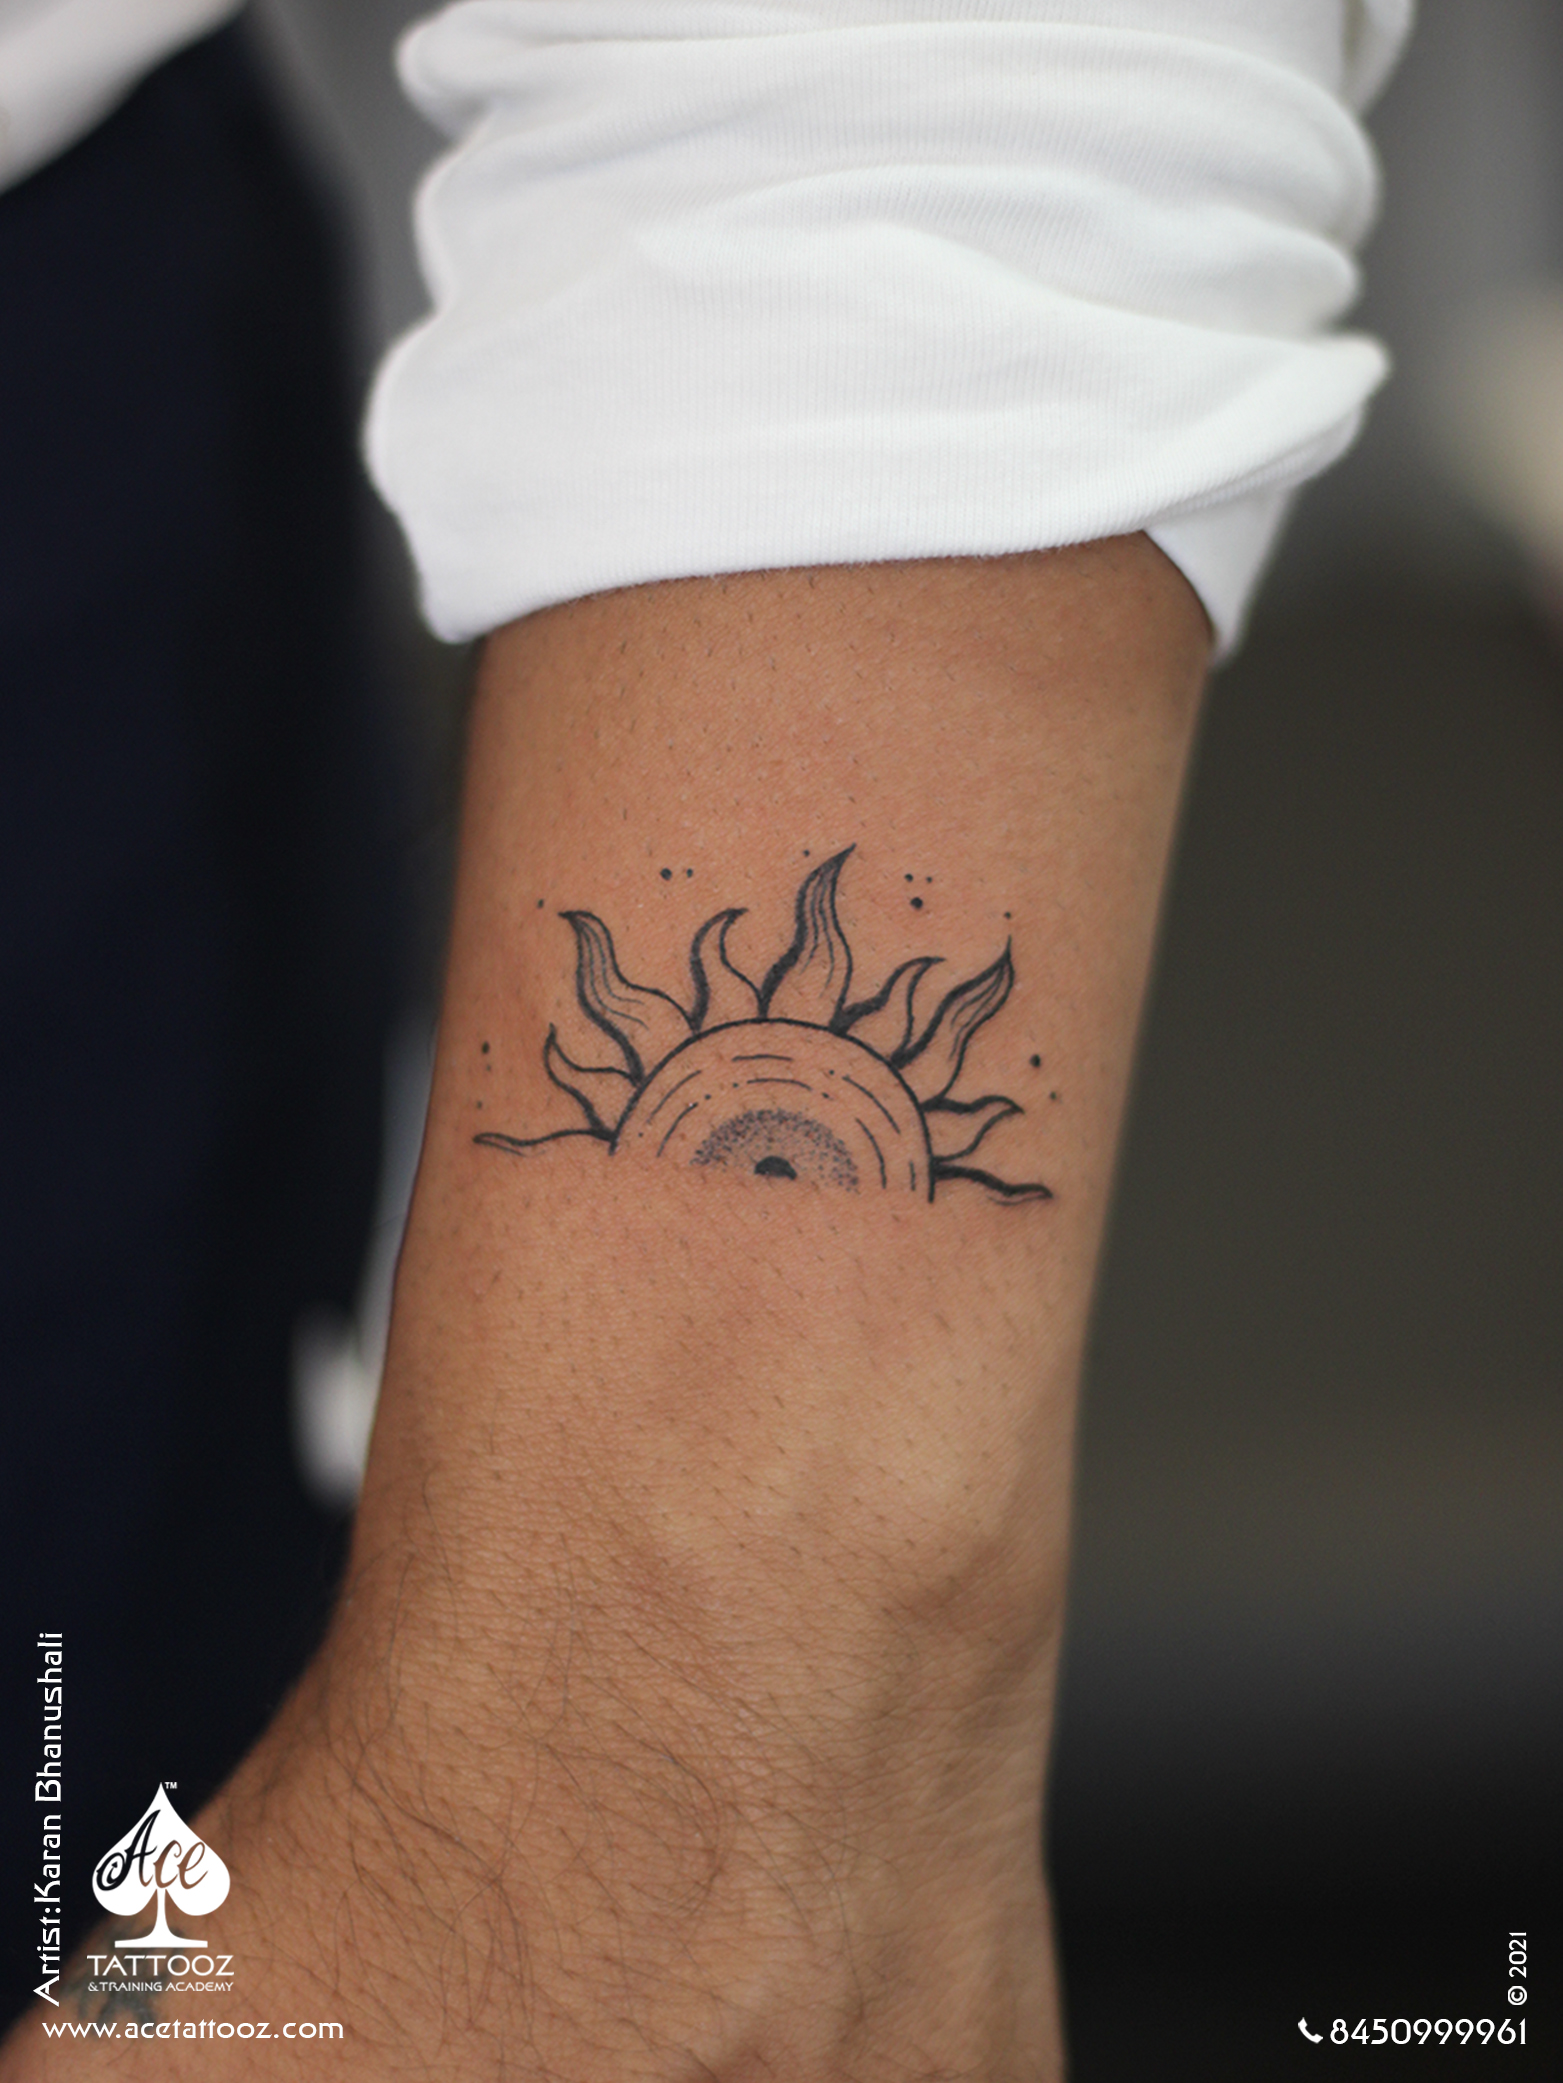 20 Sun Tattoo Designs Ideas That Will Make You Shine  Tikli